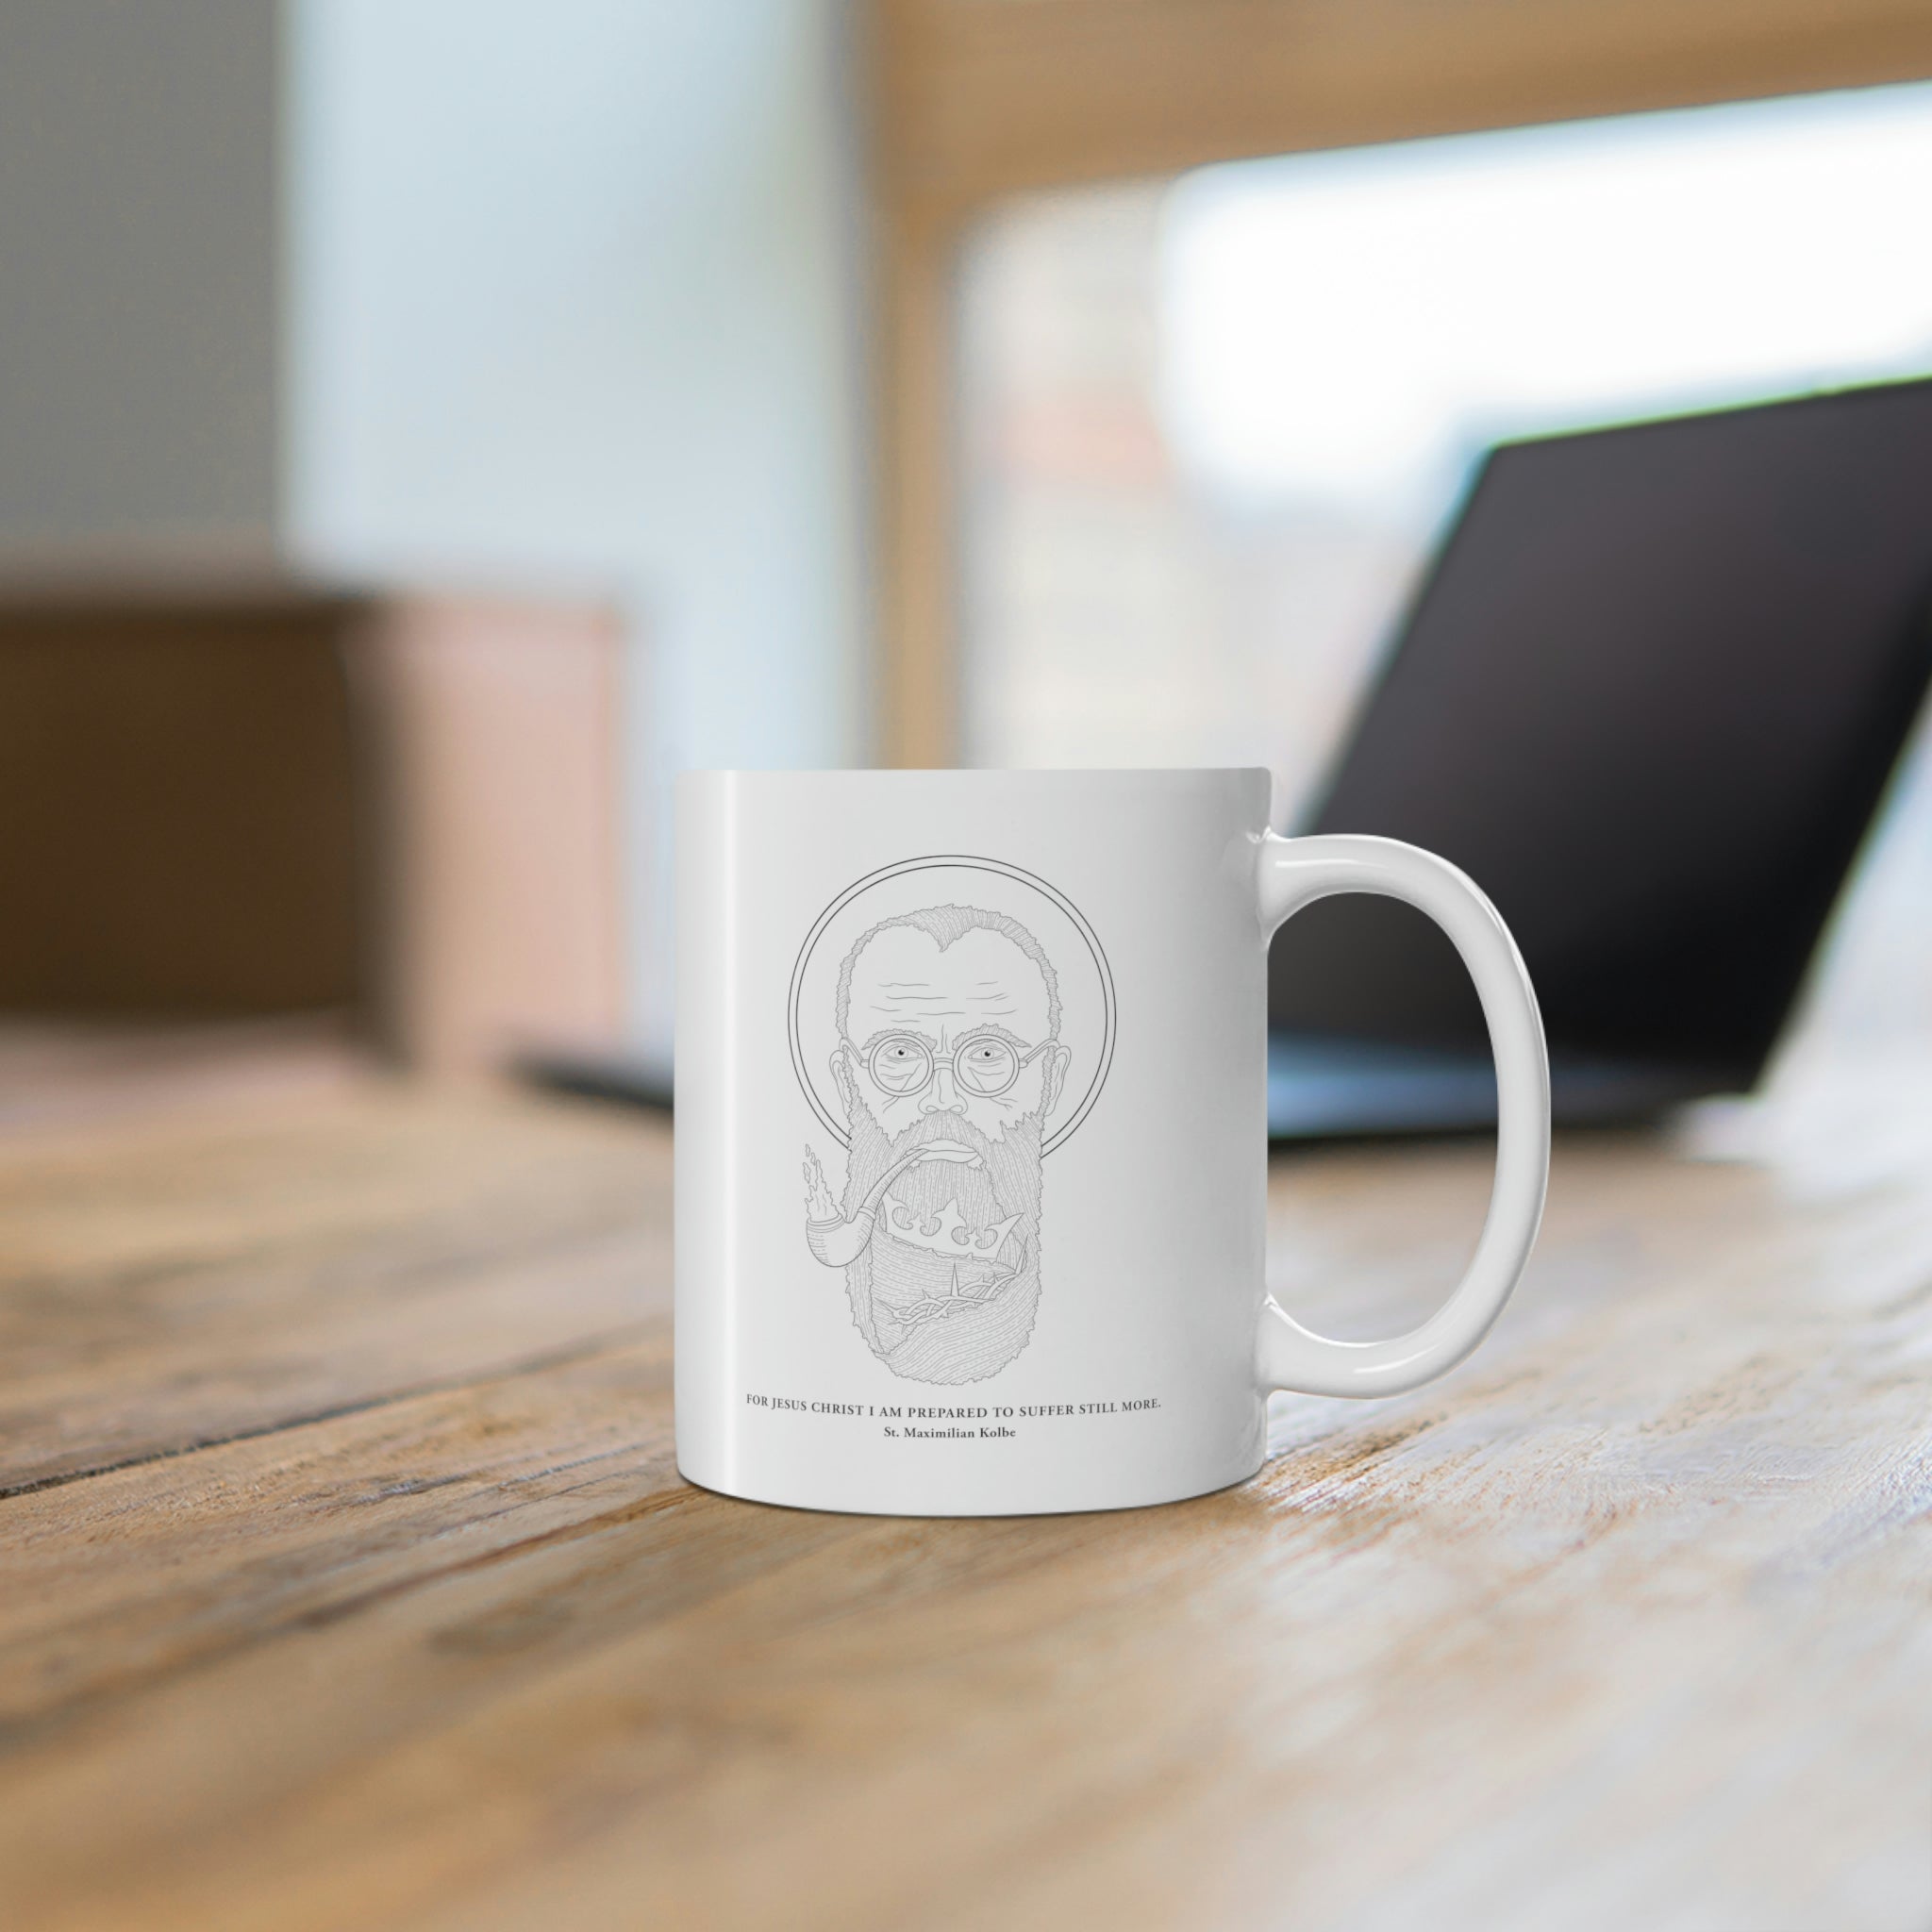 St. Maximilian Kolbe Coffee Mug